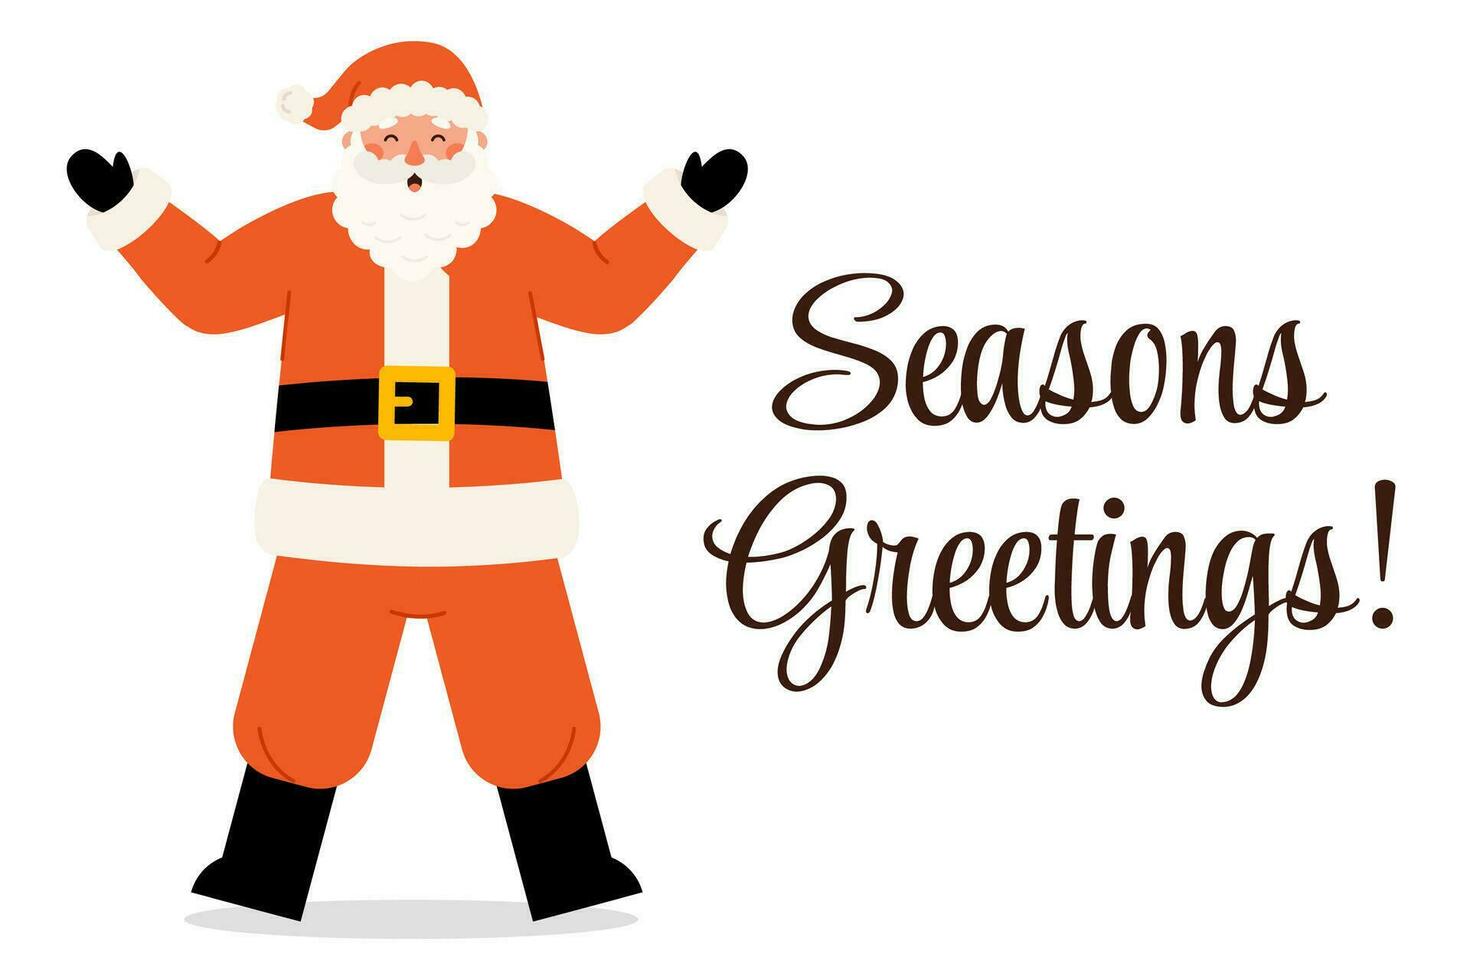 Christmas greeting card with happy Santa Claus character vector